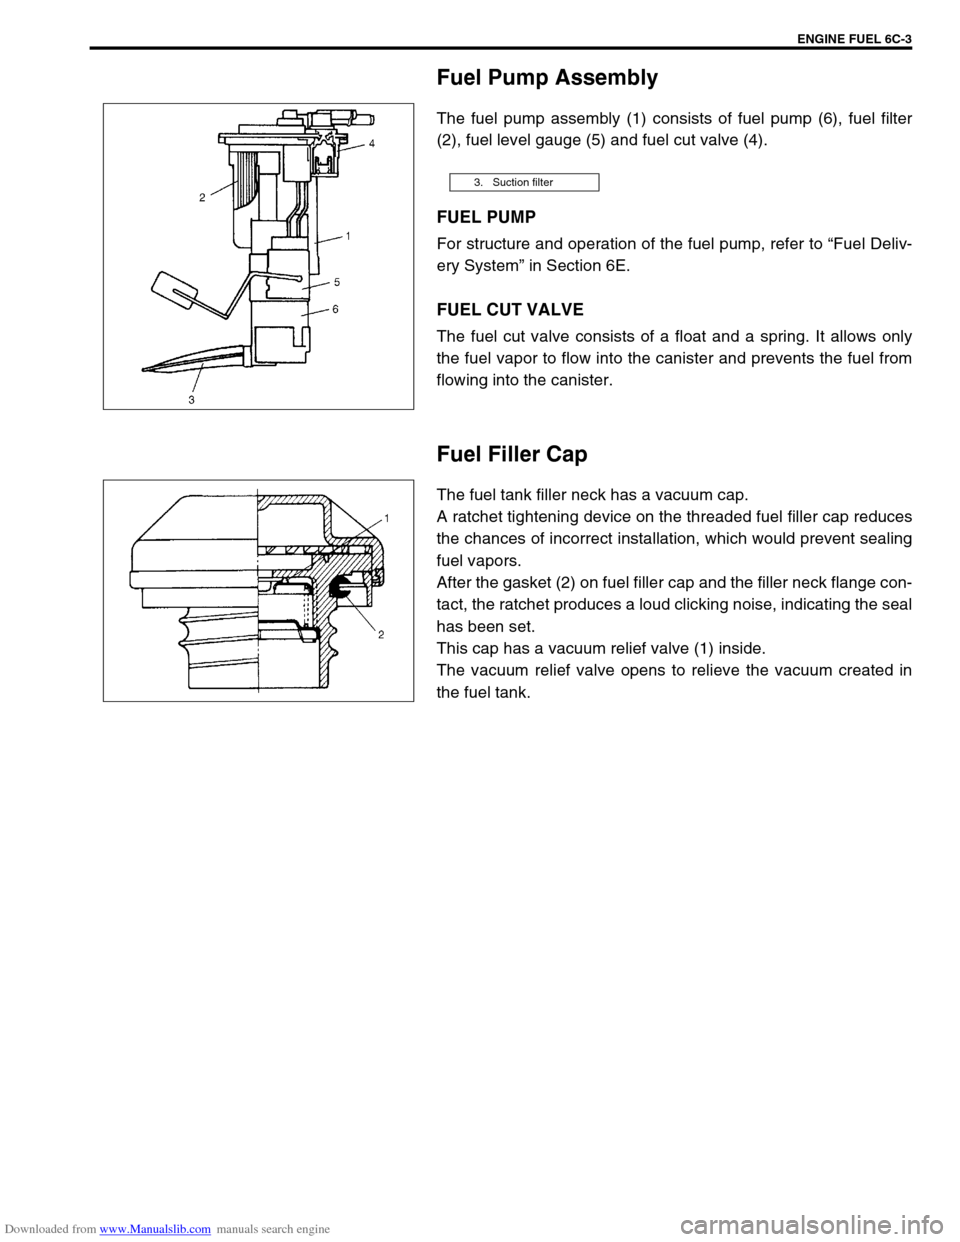 SUZUKI JIMNY 2005 3.G Service Workshop Manual Downloaded from www.Manualslib.com manuals search engine ENGINE FUEL 6C-3
Fuel Pump Assembly
The fuel pump assembly (1) consists of fuel pump (6), fuel filter
(2), fuel level gauge (5) and fuel cut va